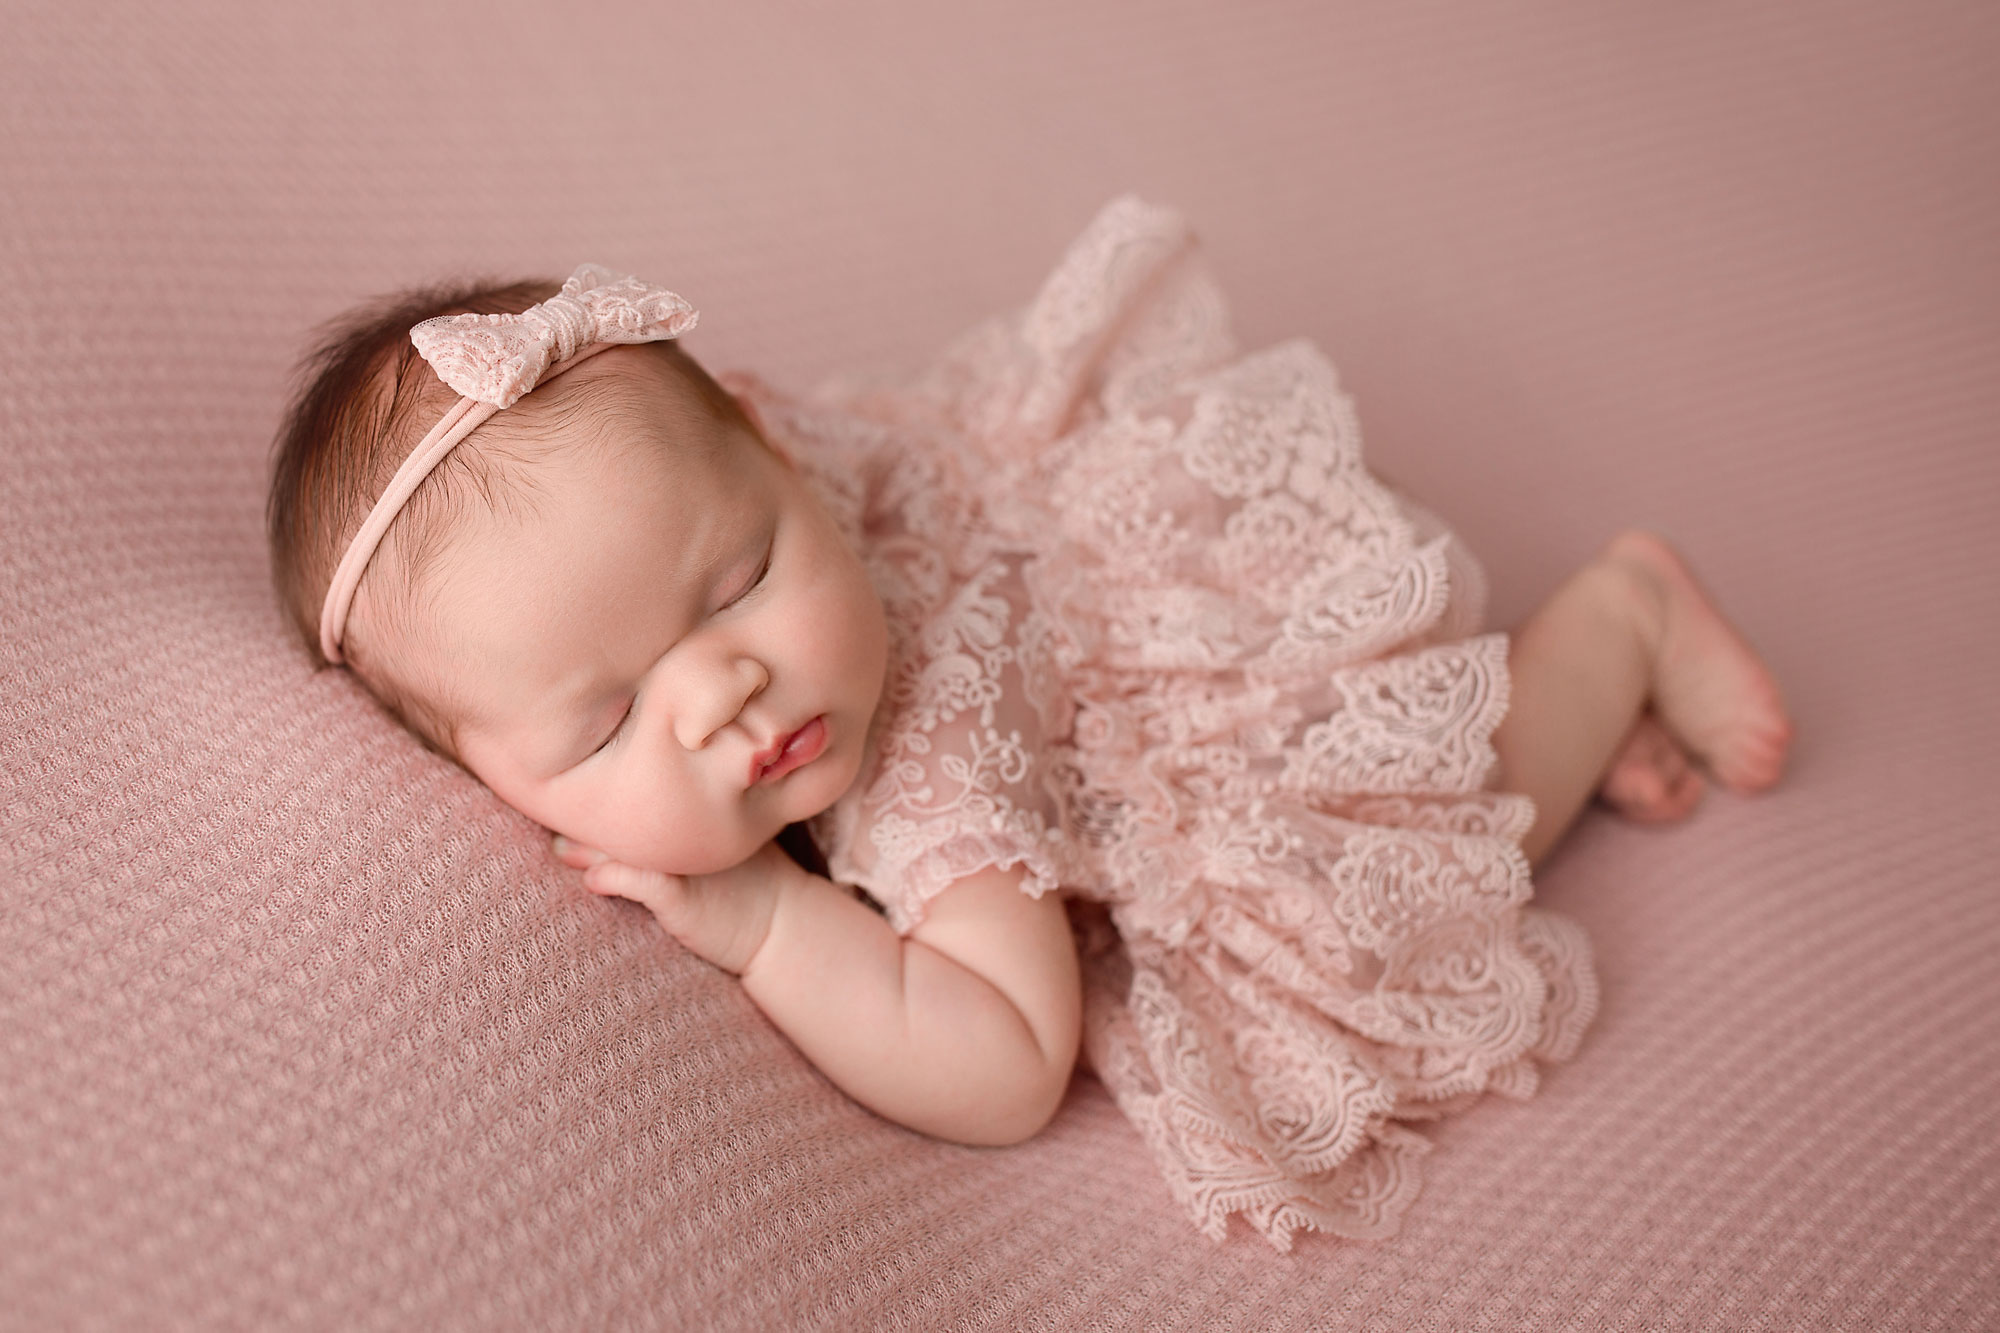 newborn baby girl sleeping on a blanket during her Newborn Baby Photos in Essex County NJ